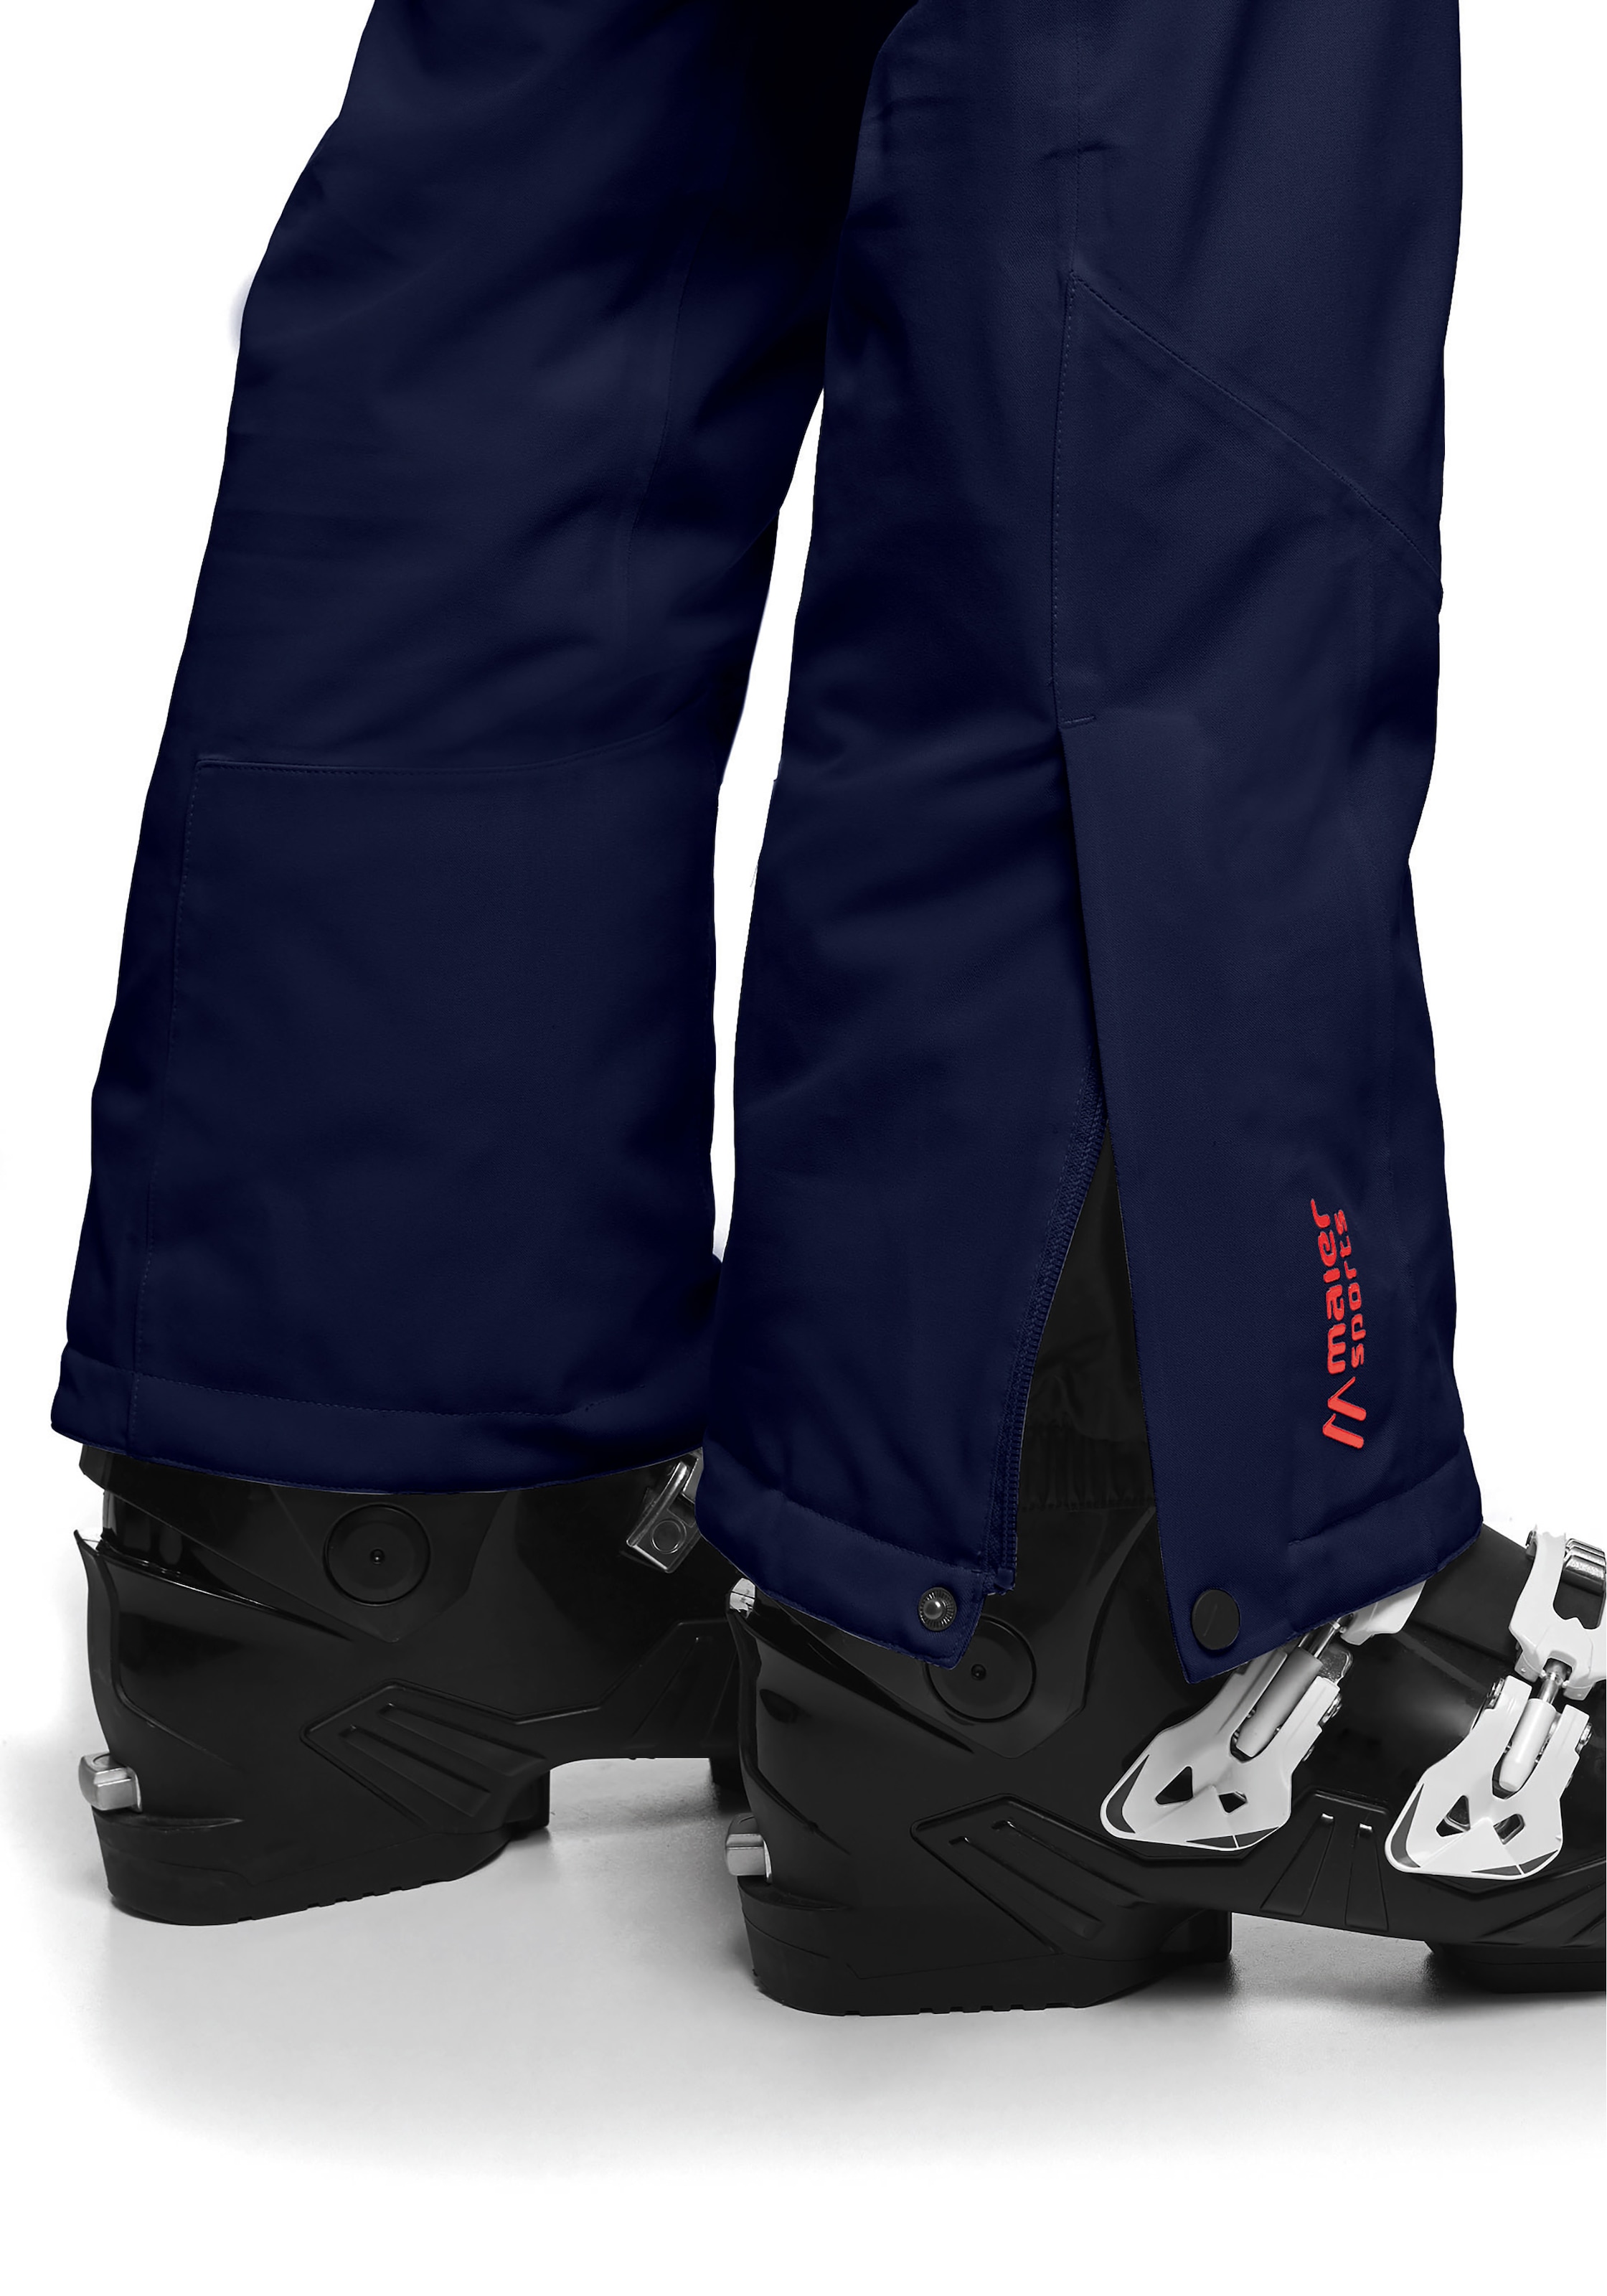 Maier Sports sportliche Skihose bei Feminin, Skihose in Silhouette OTTO schlanker online »Coral Pants«